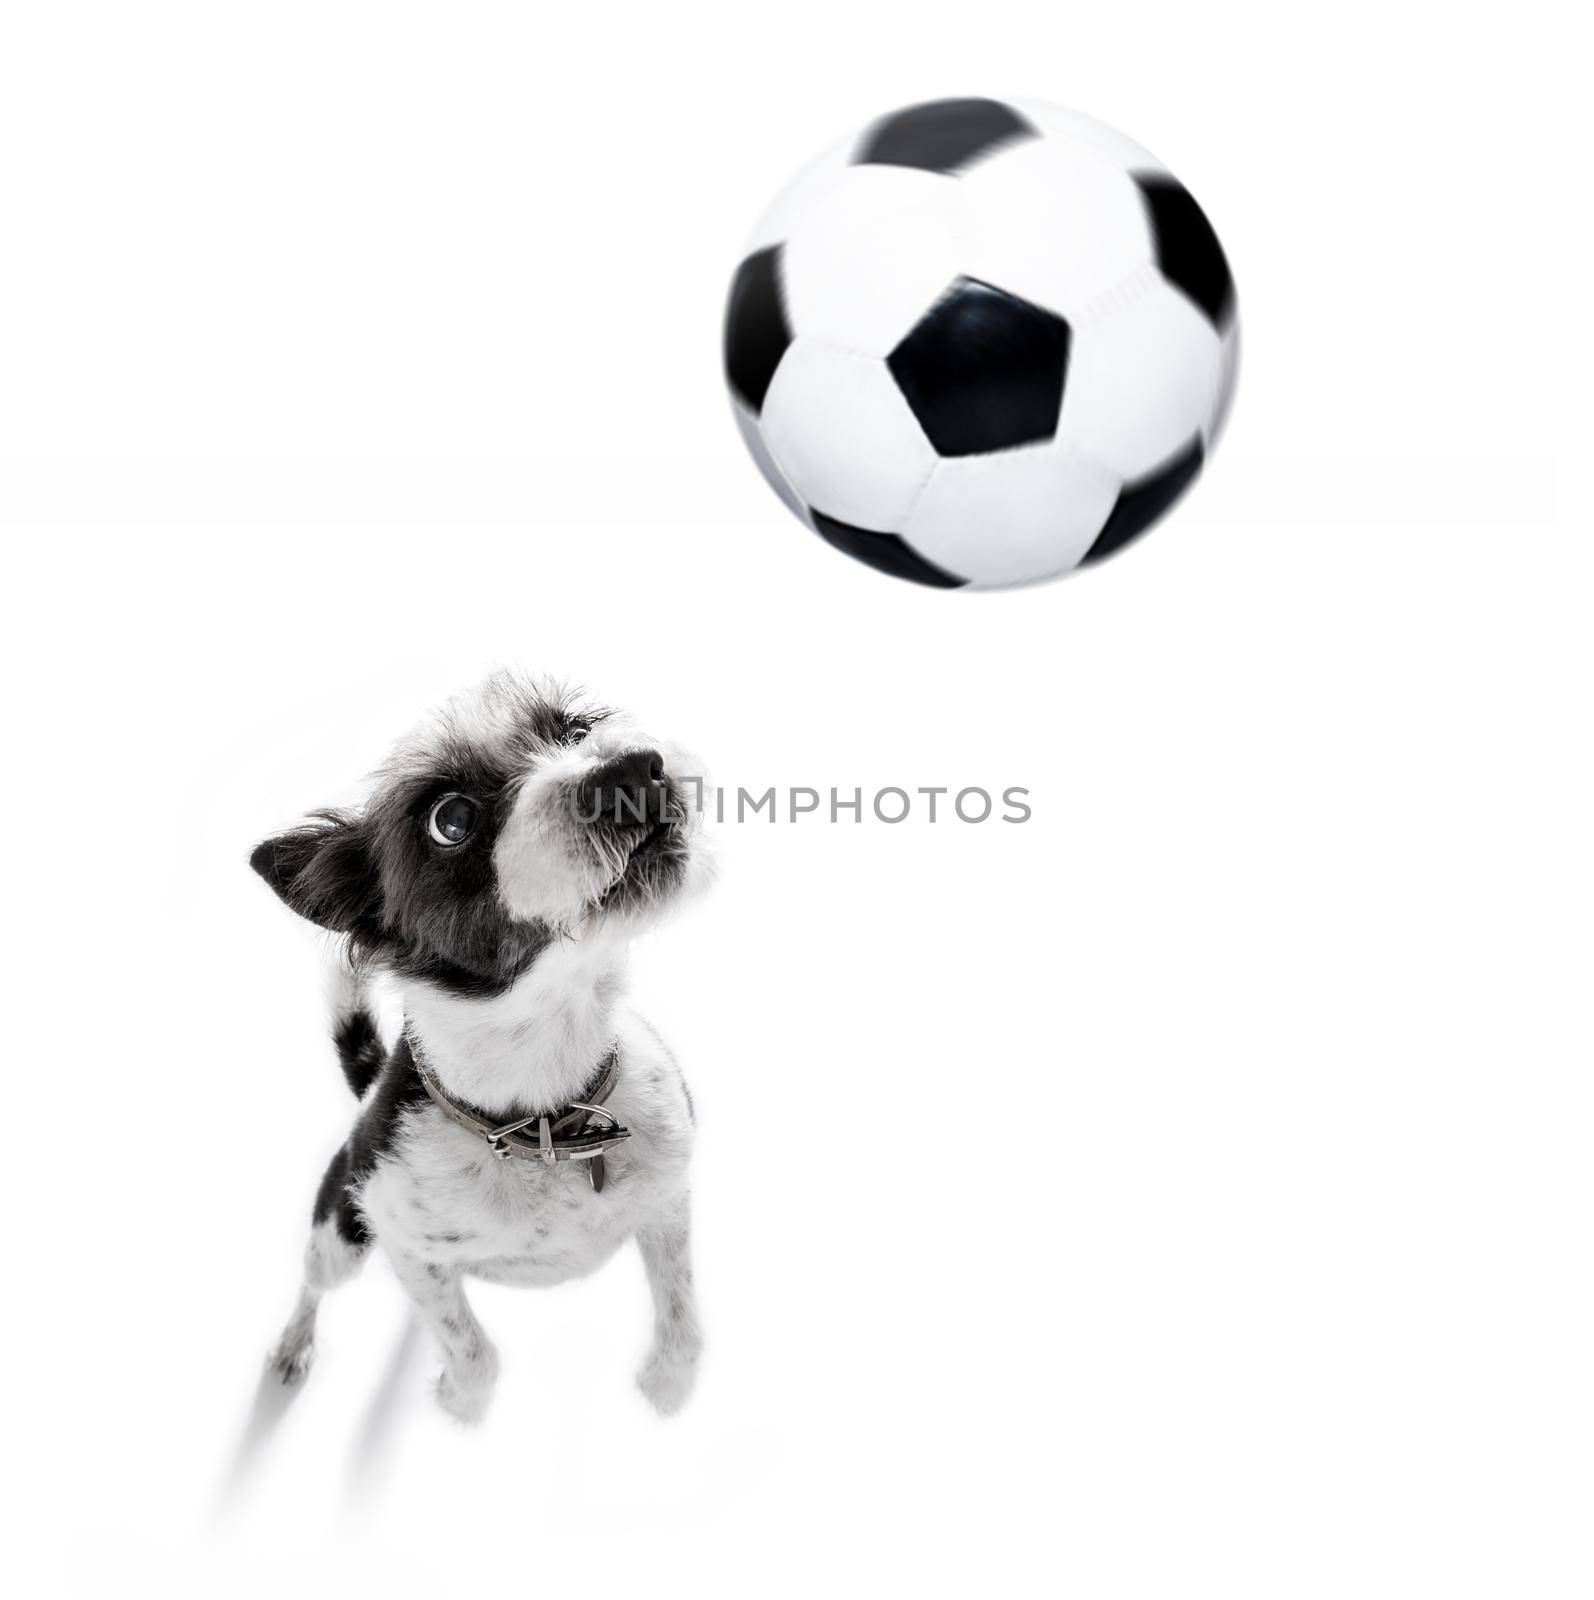 soccer poodle dog by Brosch